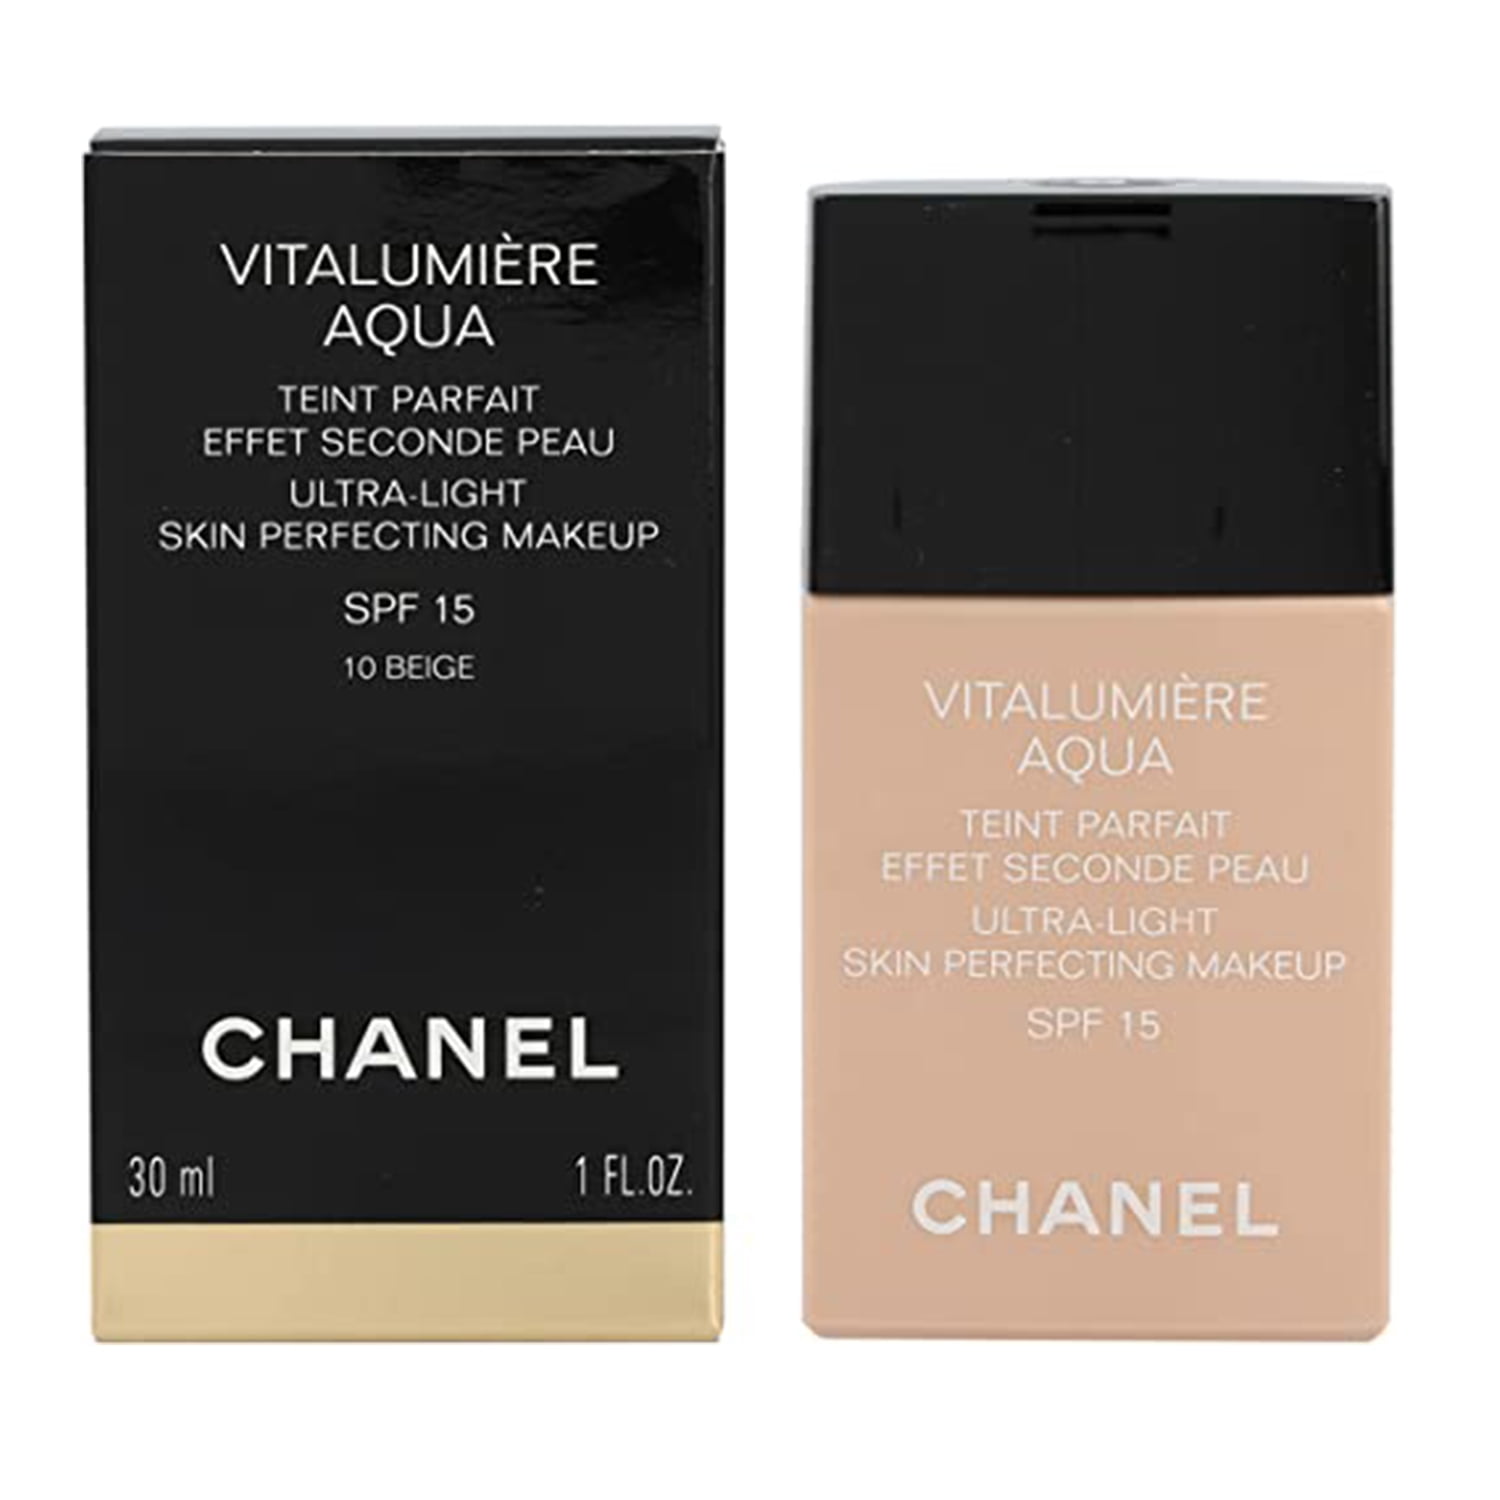 Chanel Vitalumiere Aqua Ultra-Light Skin Perfecting Makeup, SPF 15, Beige - 1 oz bottle